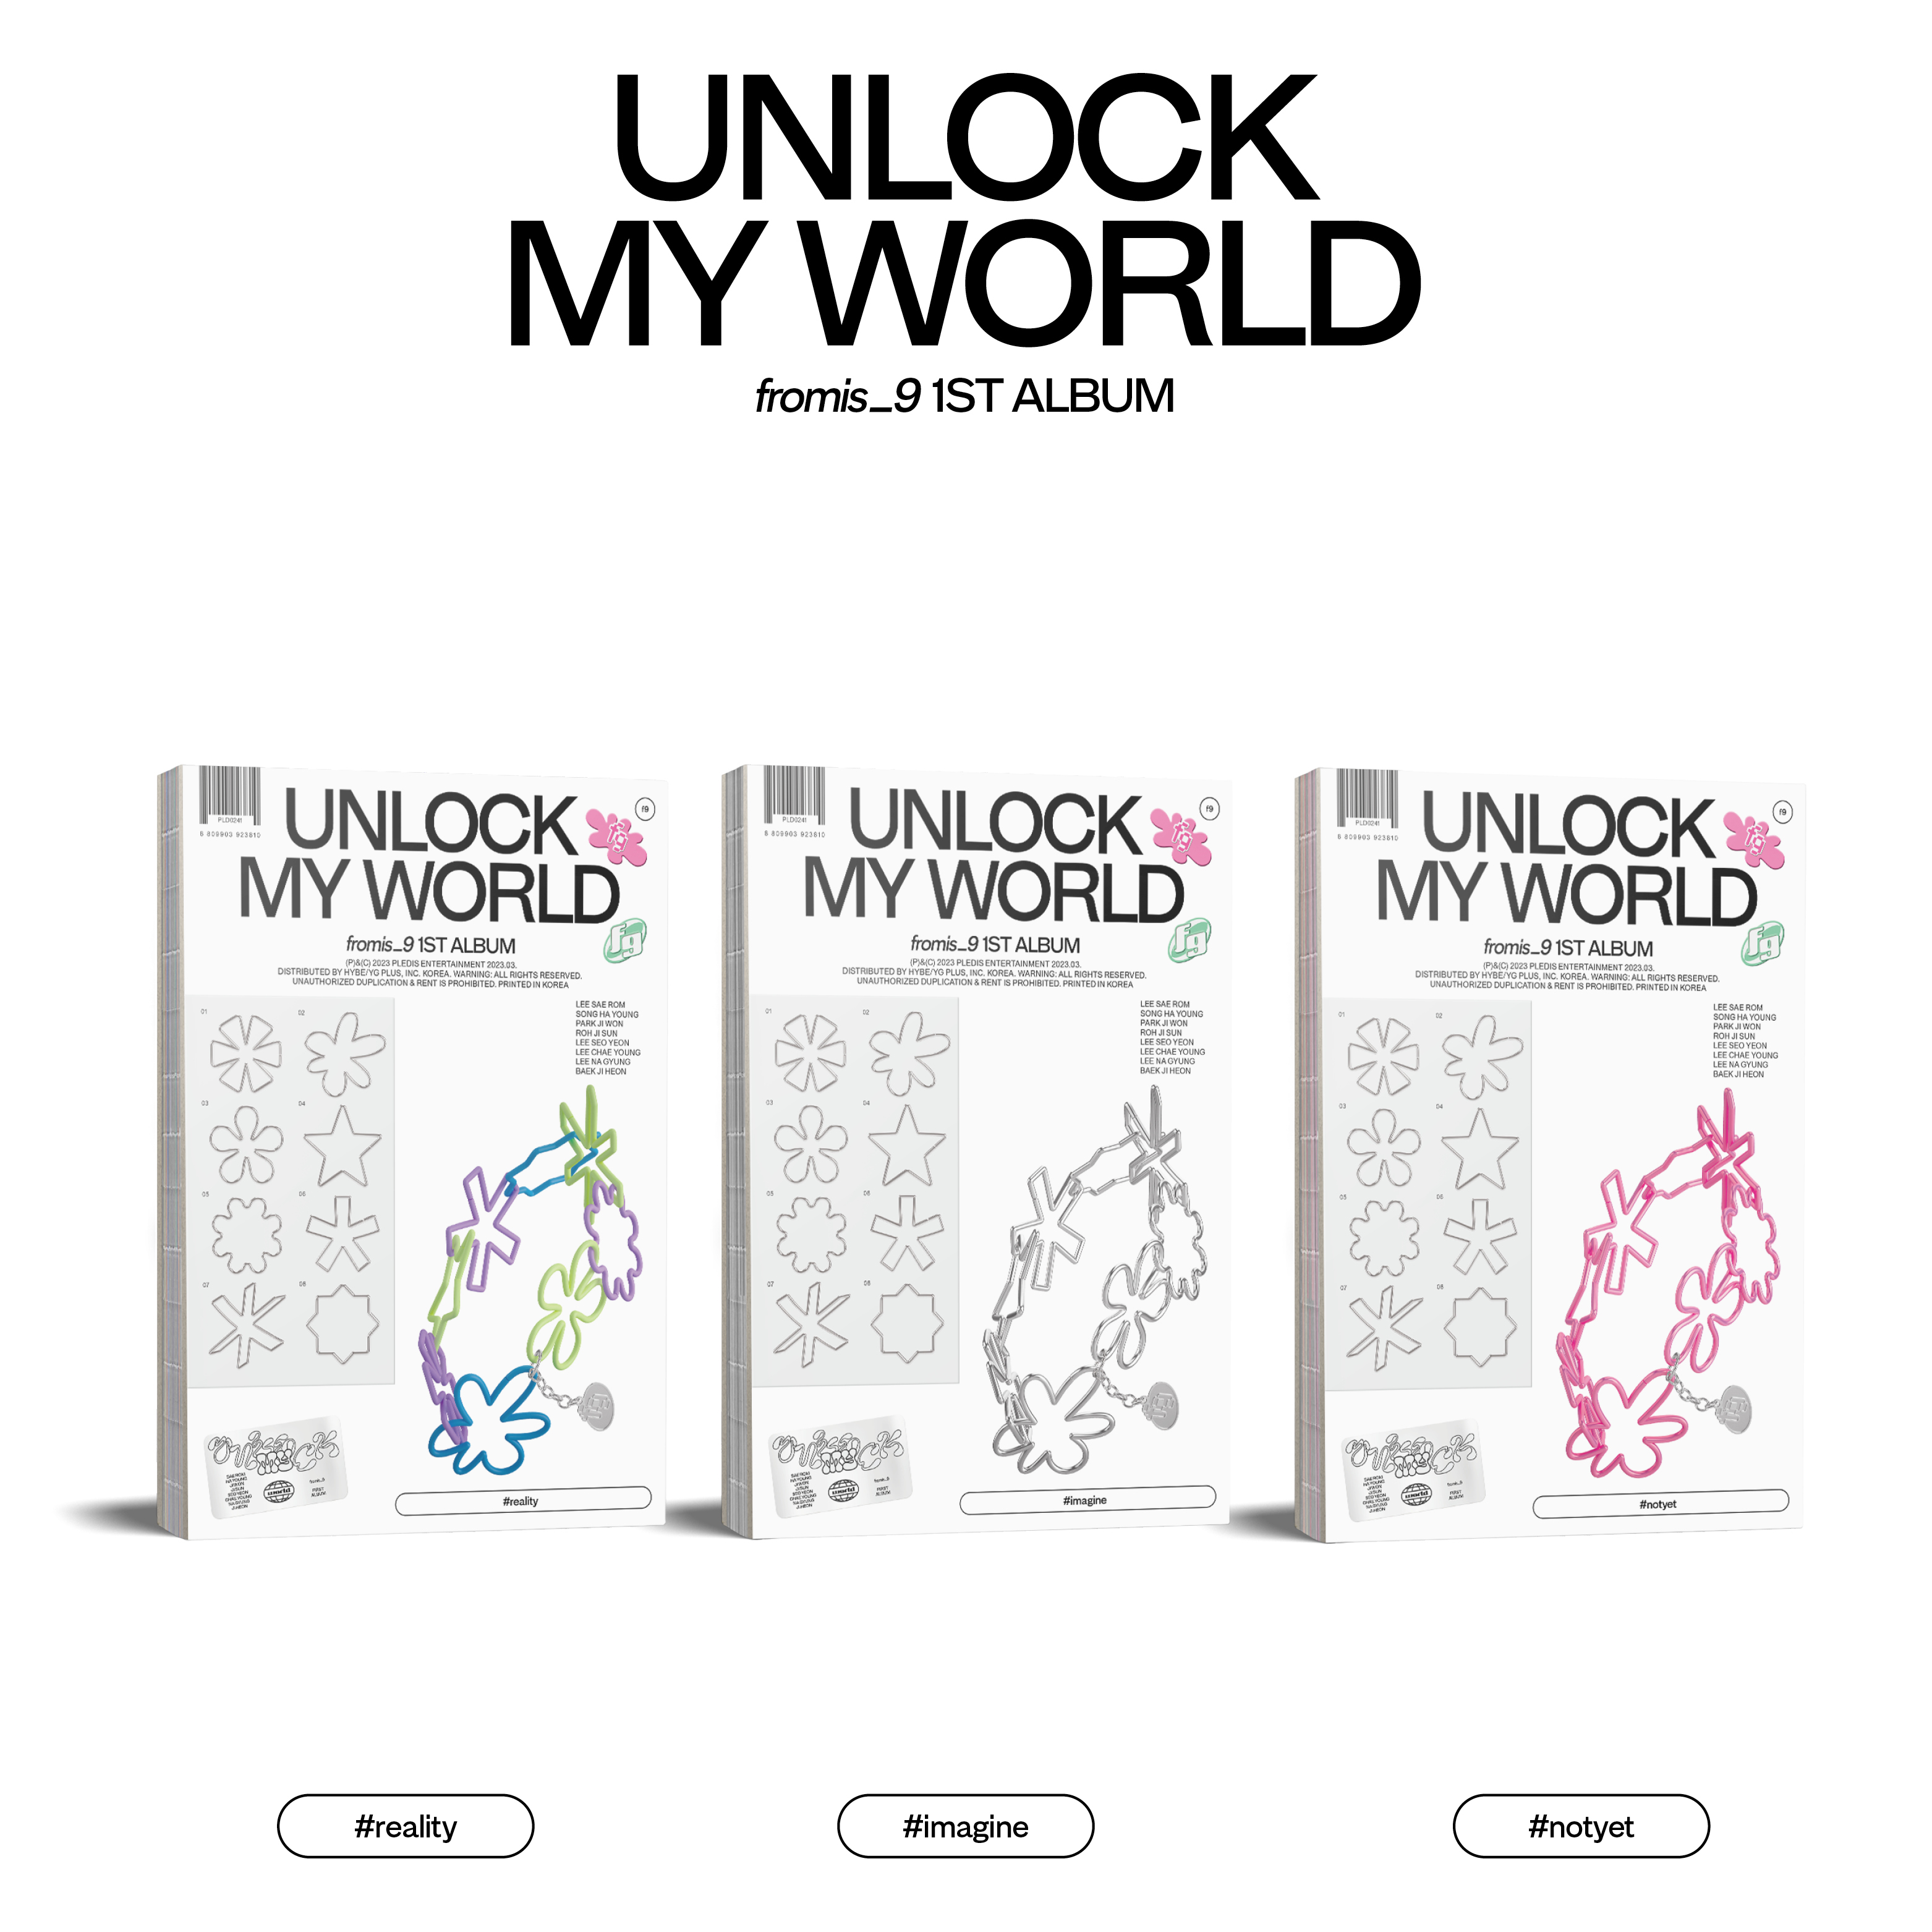 [全款 裸专] [Ktown4u Special Gift] [3CD 套装] fromis_9 - 1st Album [Unlock My World] (#reality Ver. + #imagine Ver. + #notyet Ver.)_九站联合